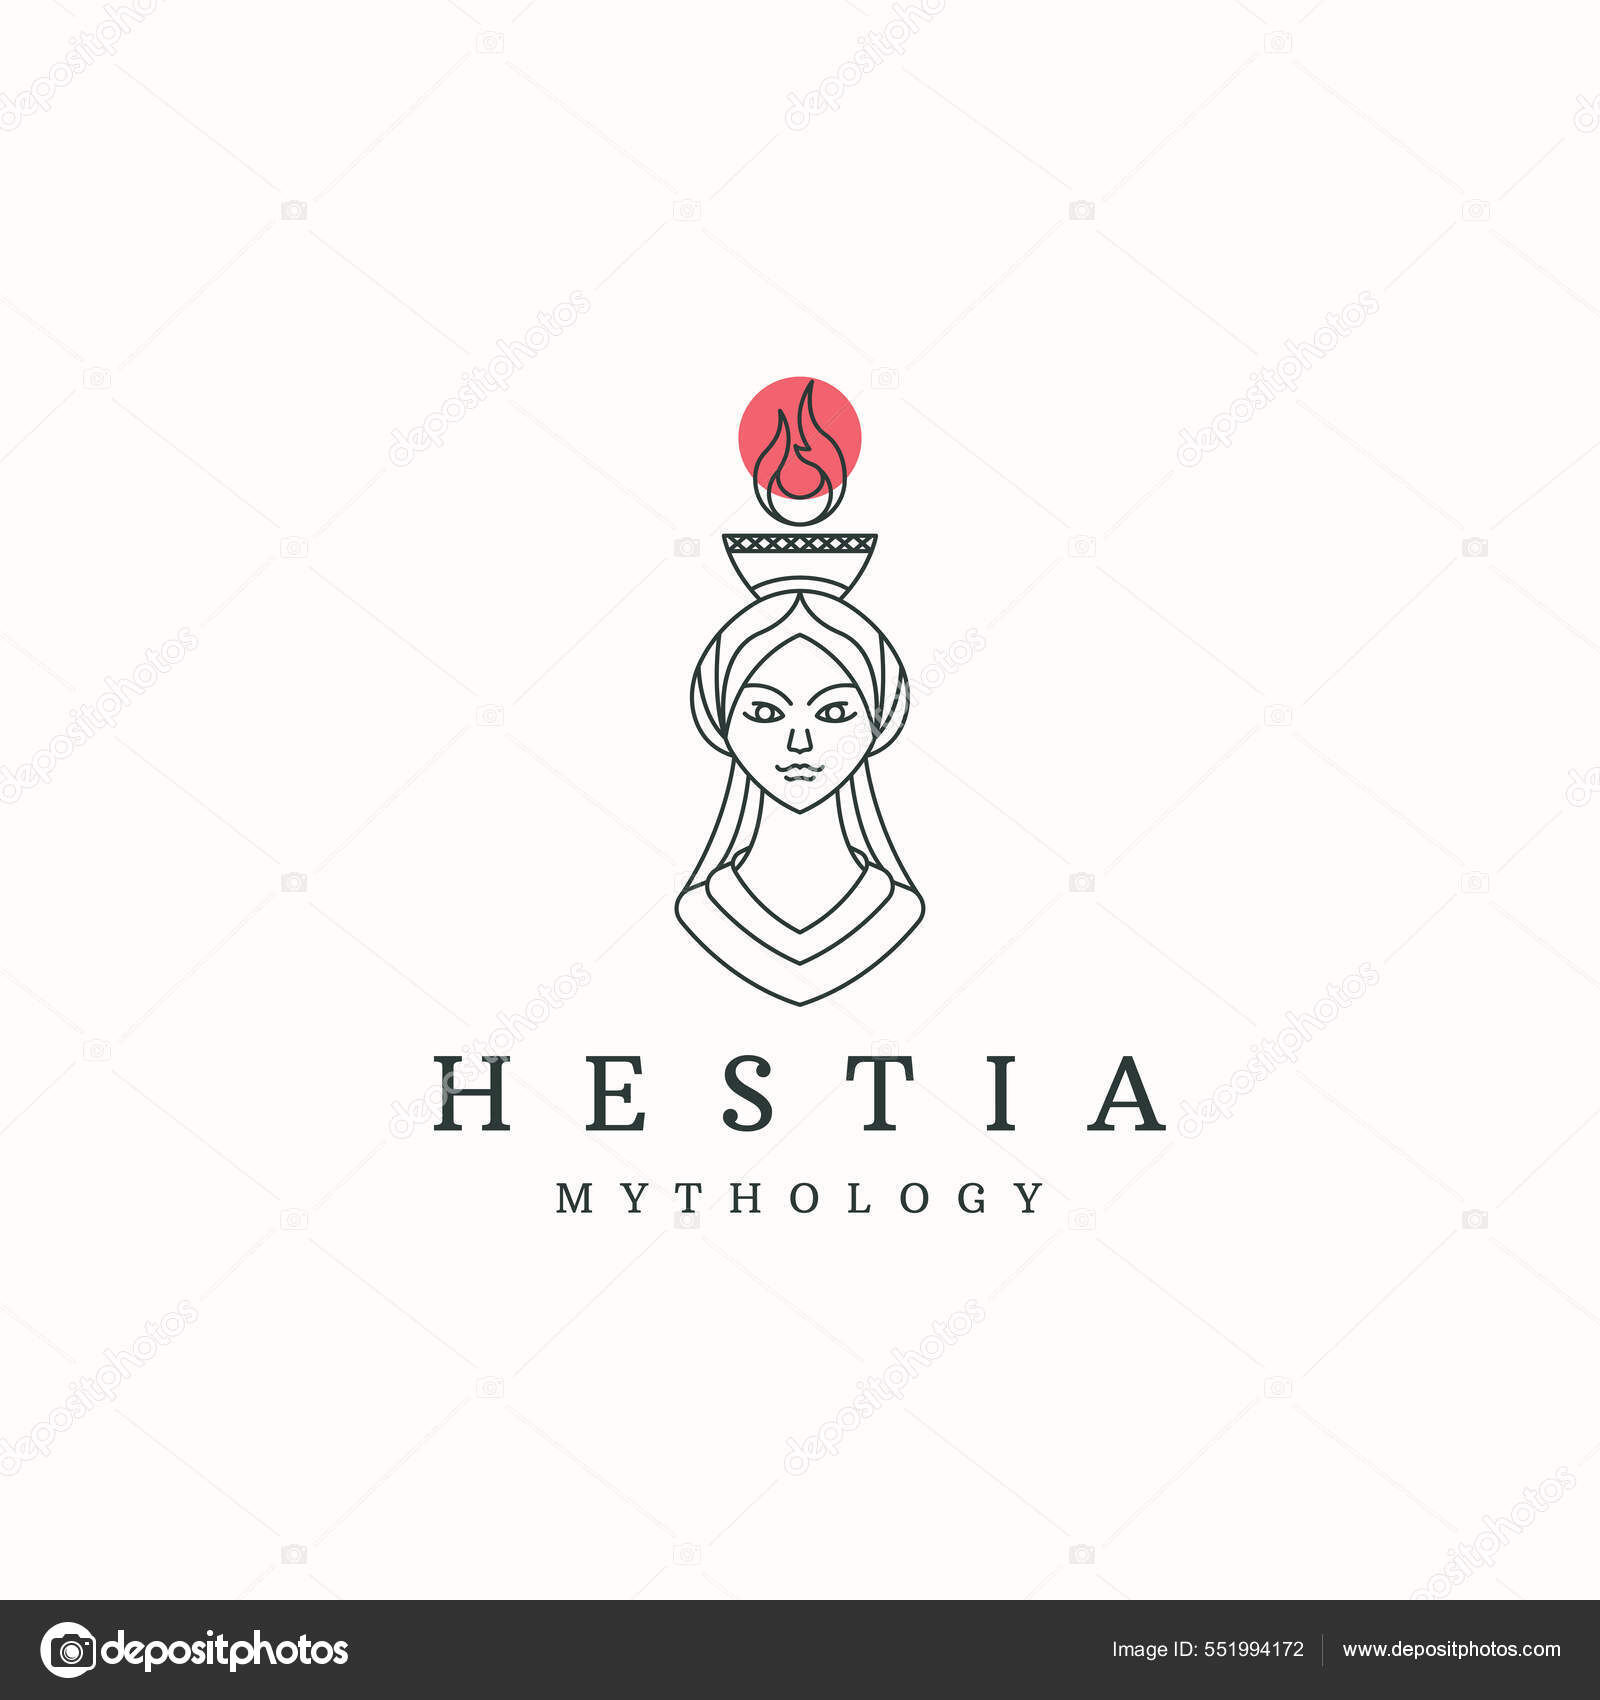 Hestia — Vintage adverts online